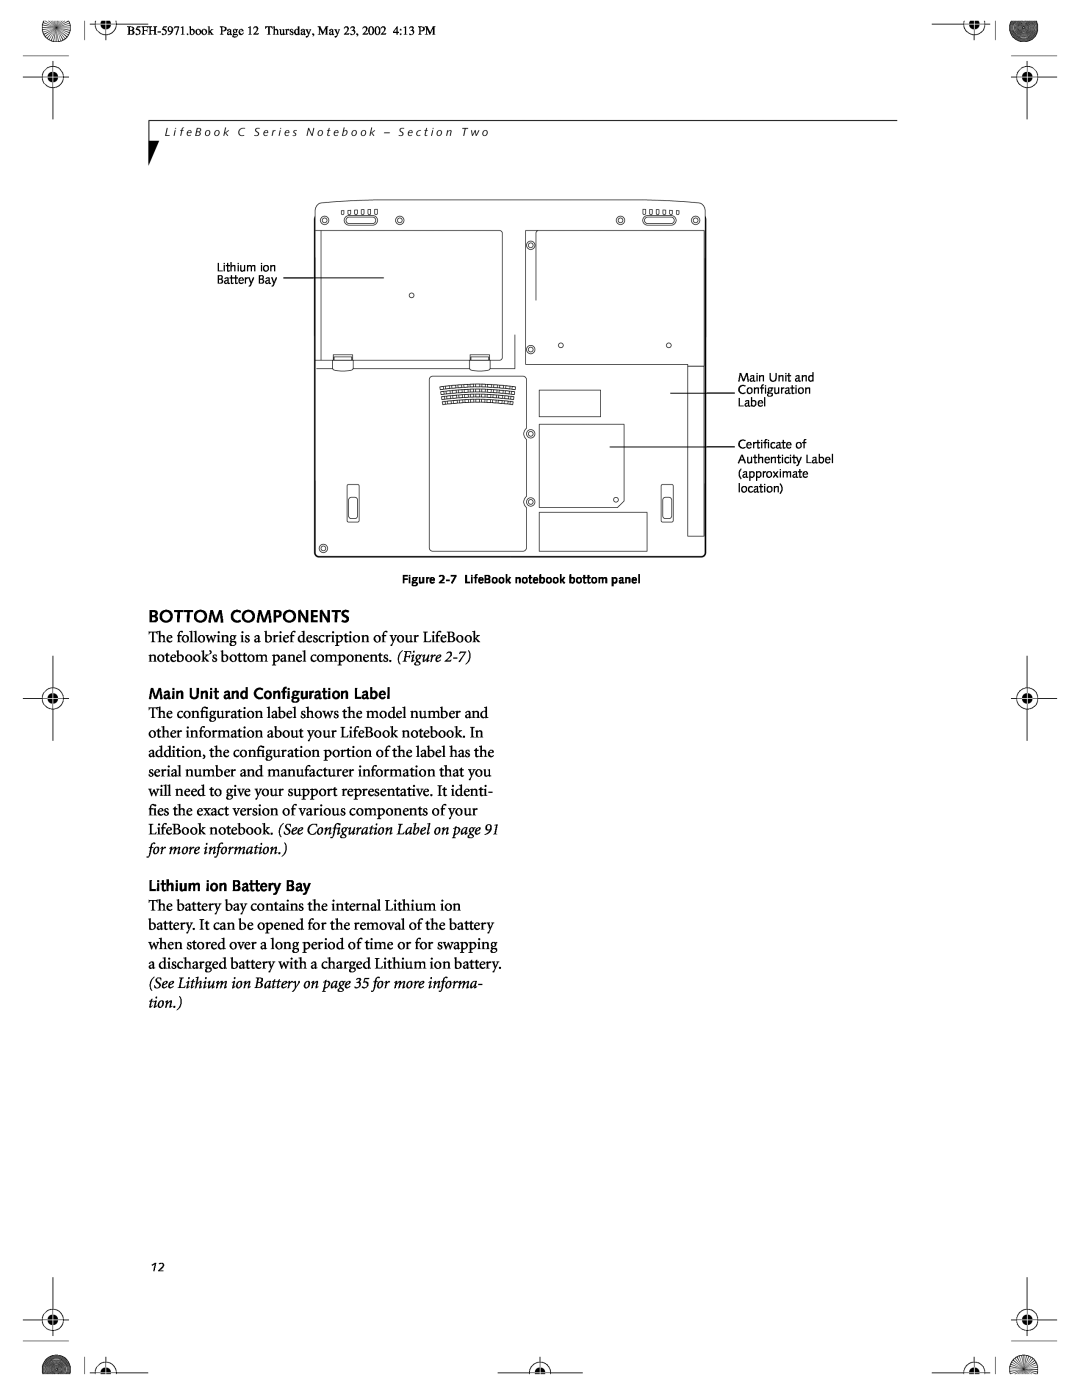 Fujitsu C2111, C2010 manual Bottom Components, Main Unit and Configuration Label, Lithium ion Battery Bay 